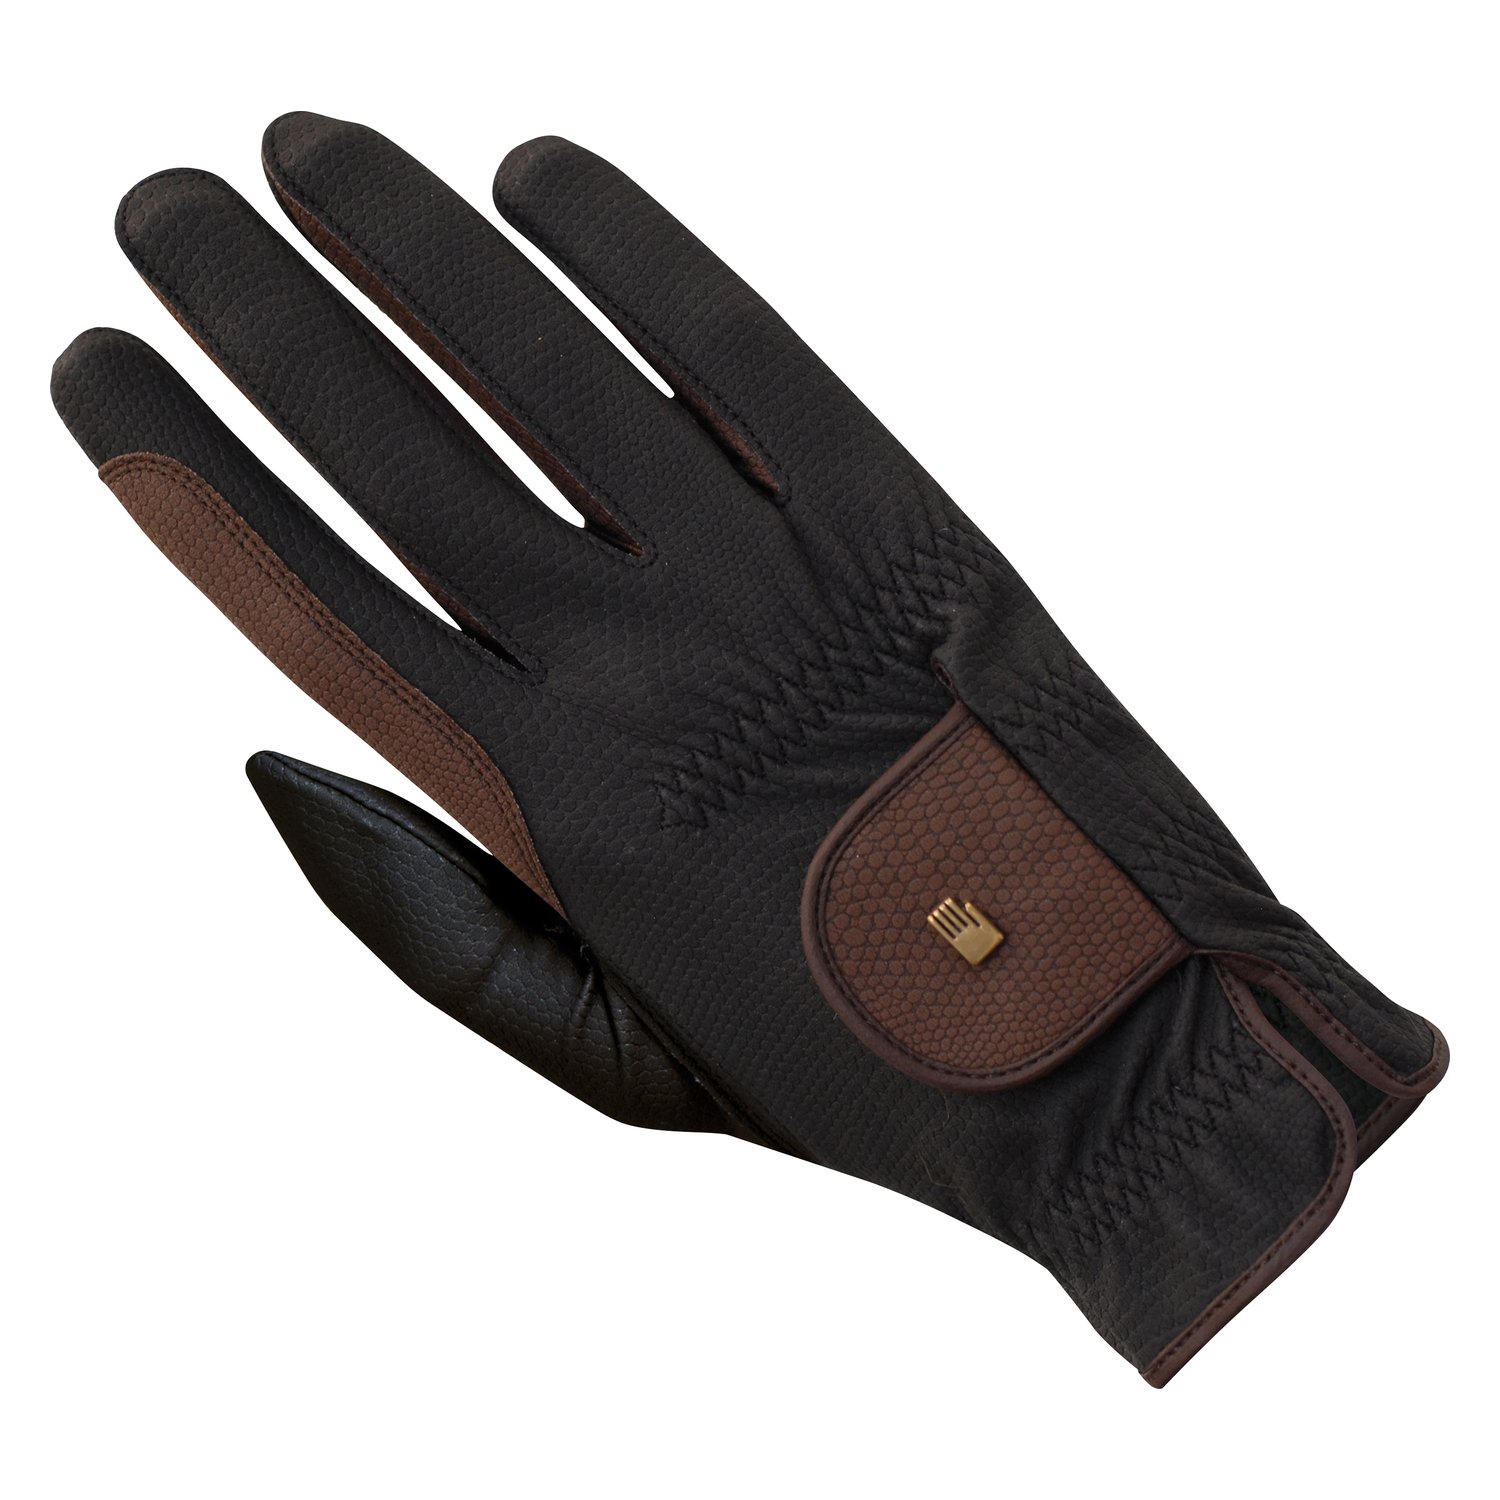 Roeckl Handschuhe Malta Winter schwarz/mokka | 6,0